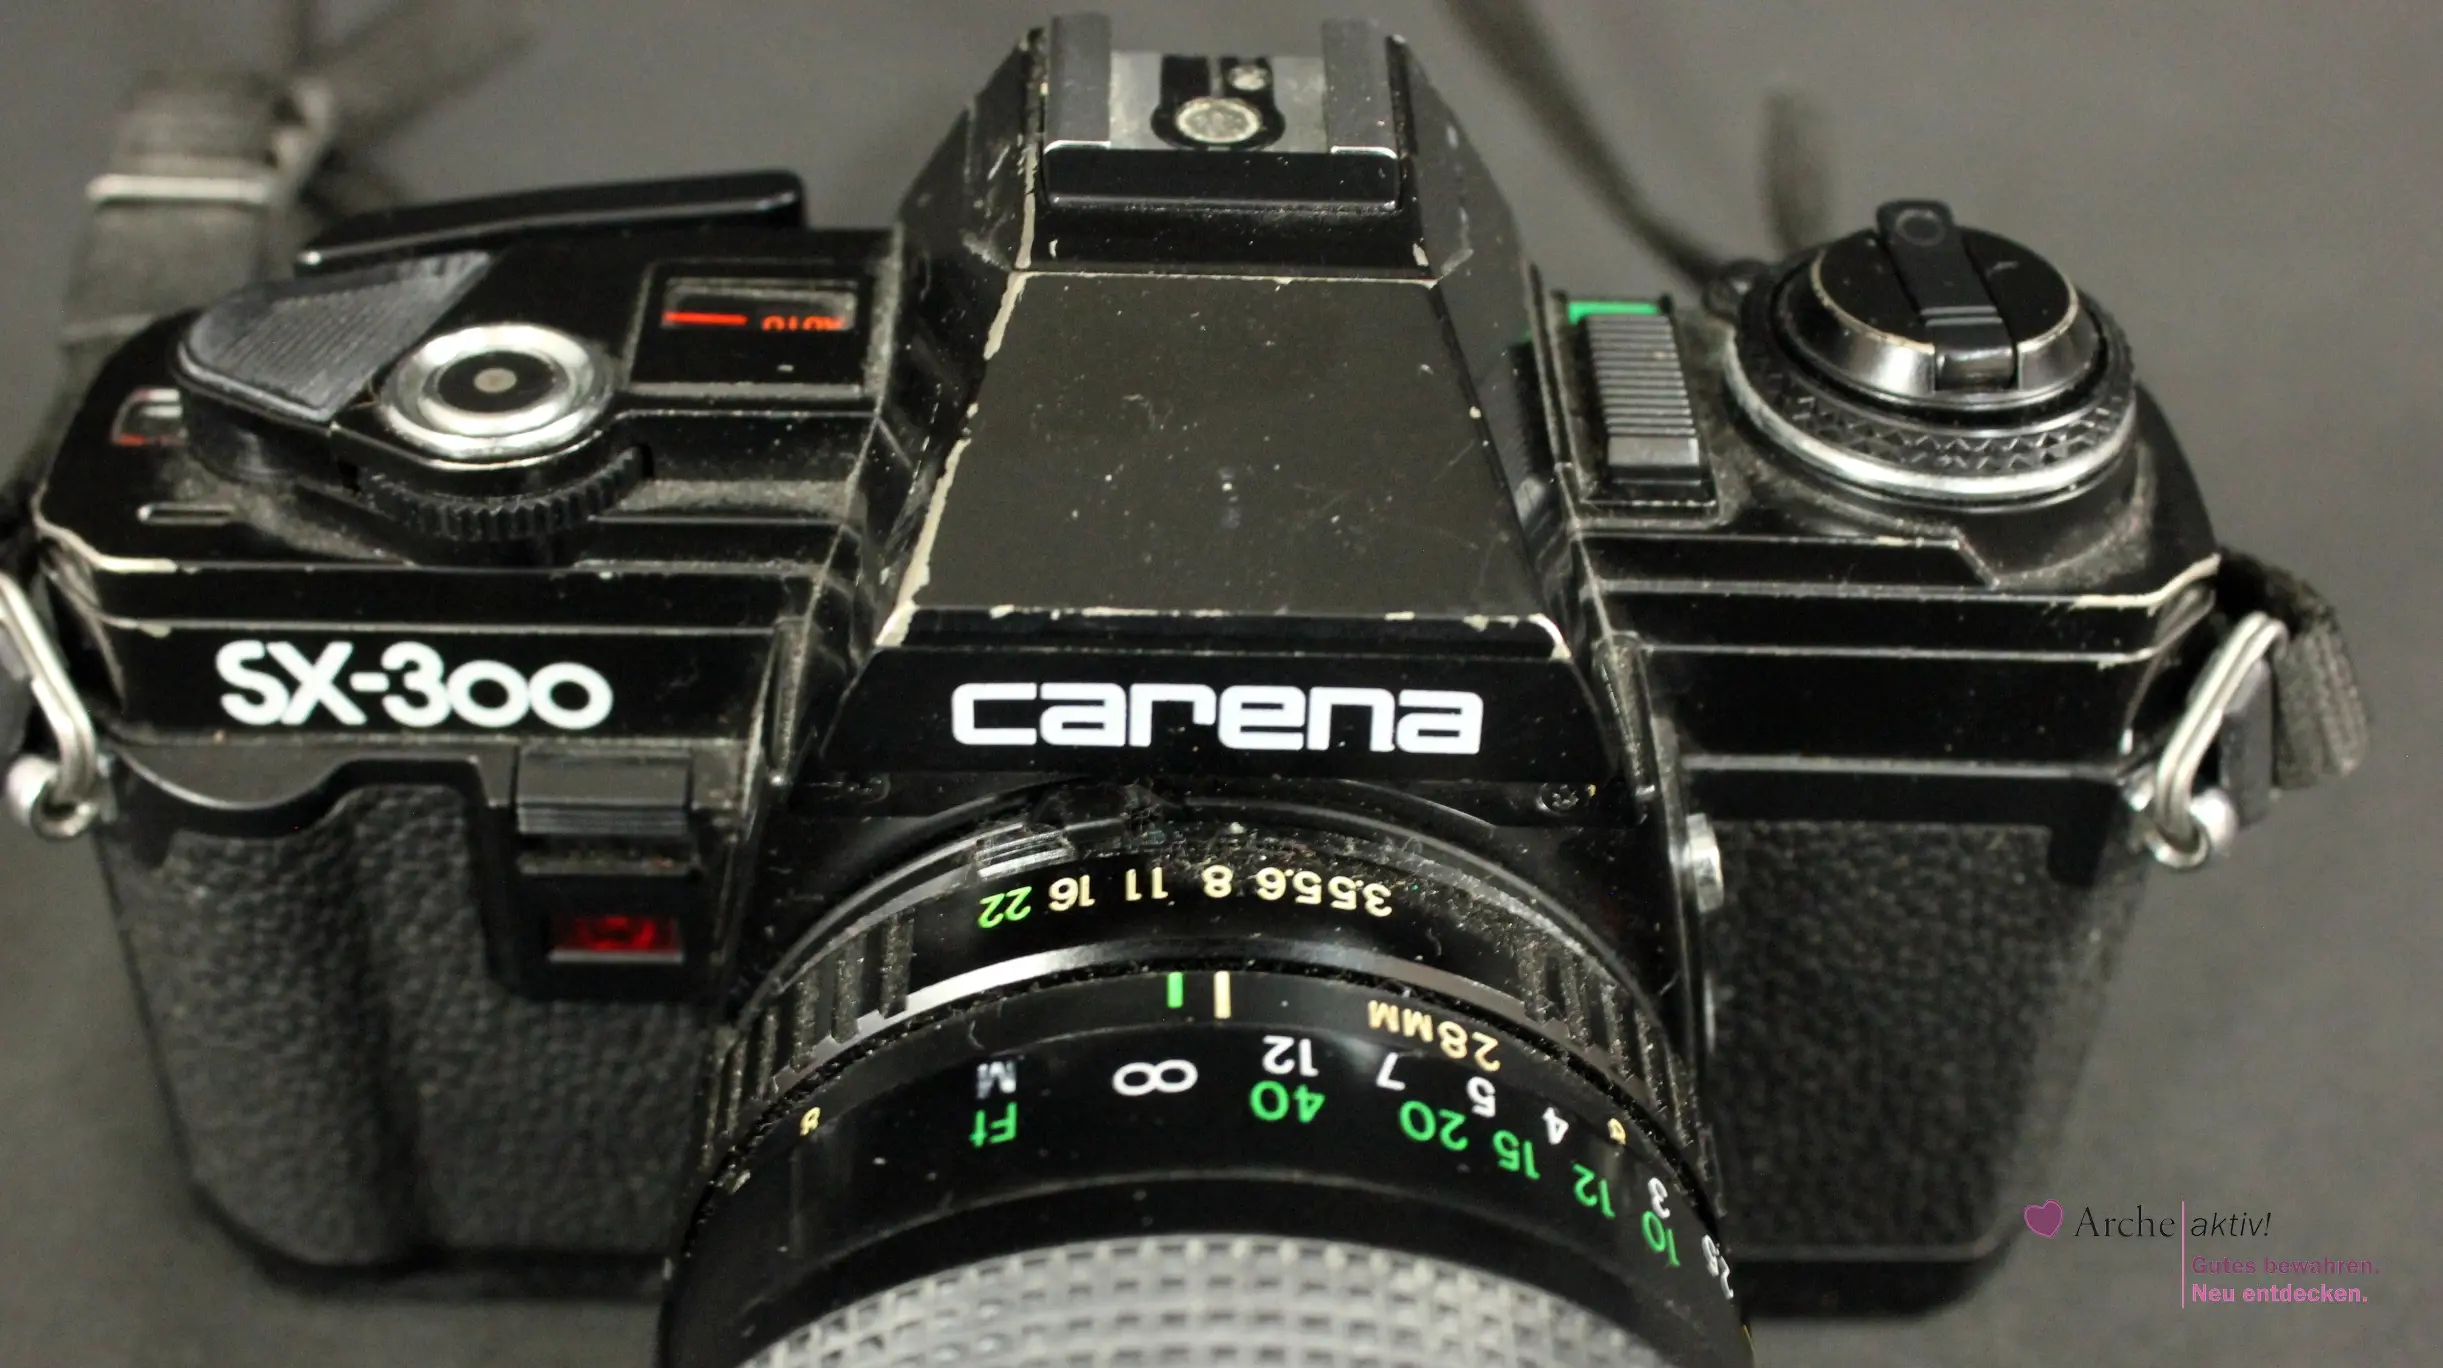 Carena SX-300 SLR-Kamera mit Exakta 28-200 mm 1:3,5-5,6 Macro, gebraucht